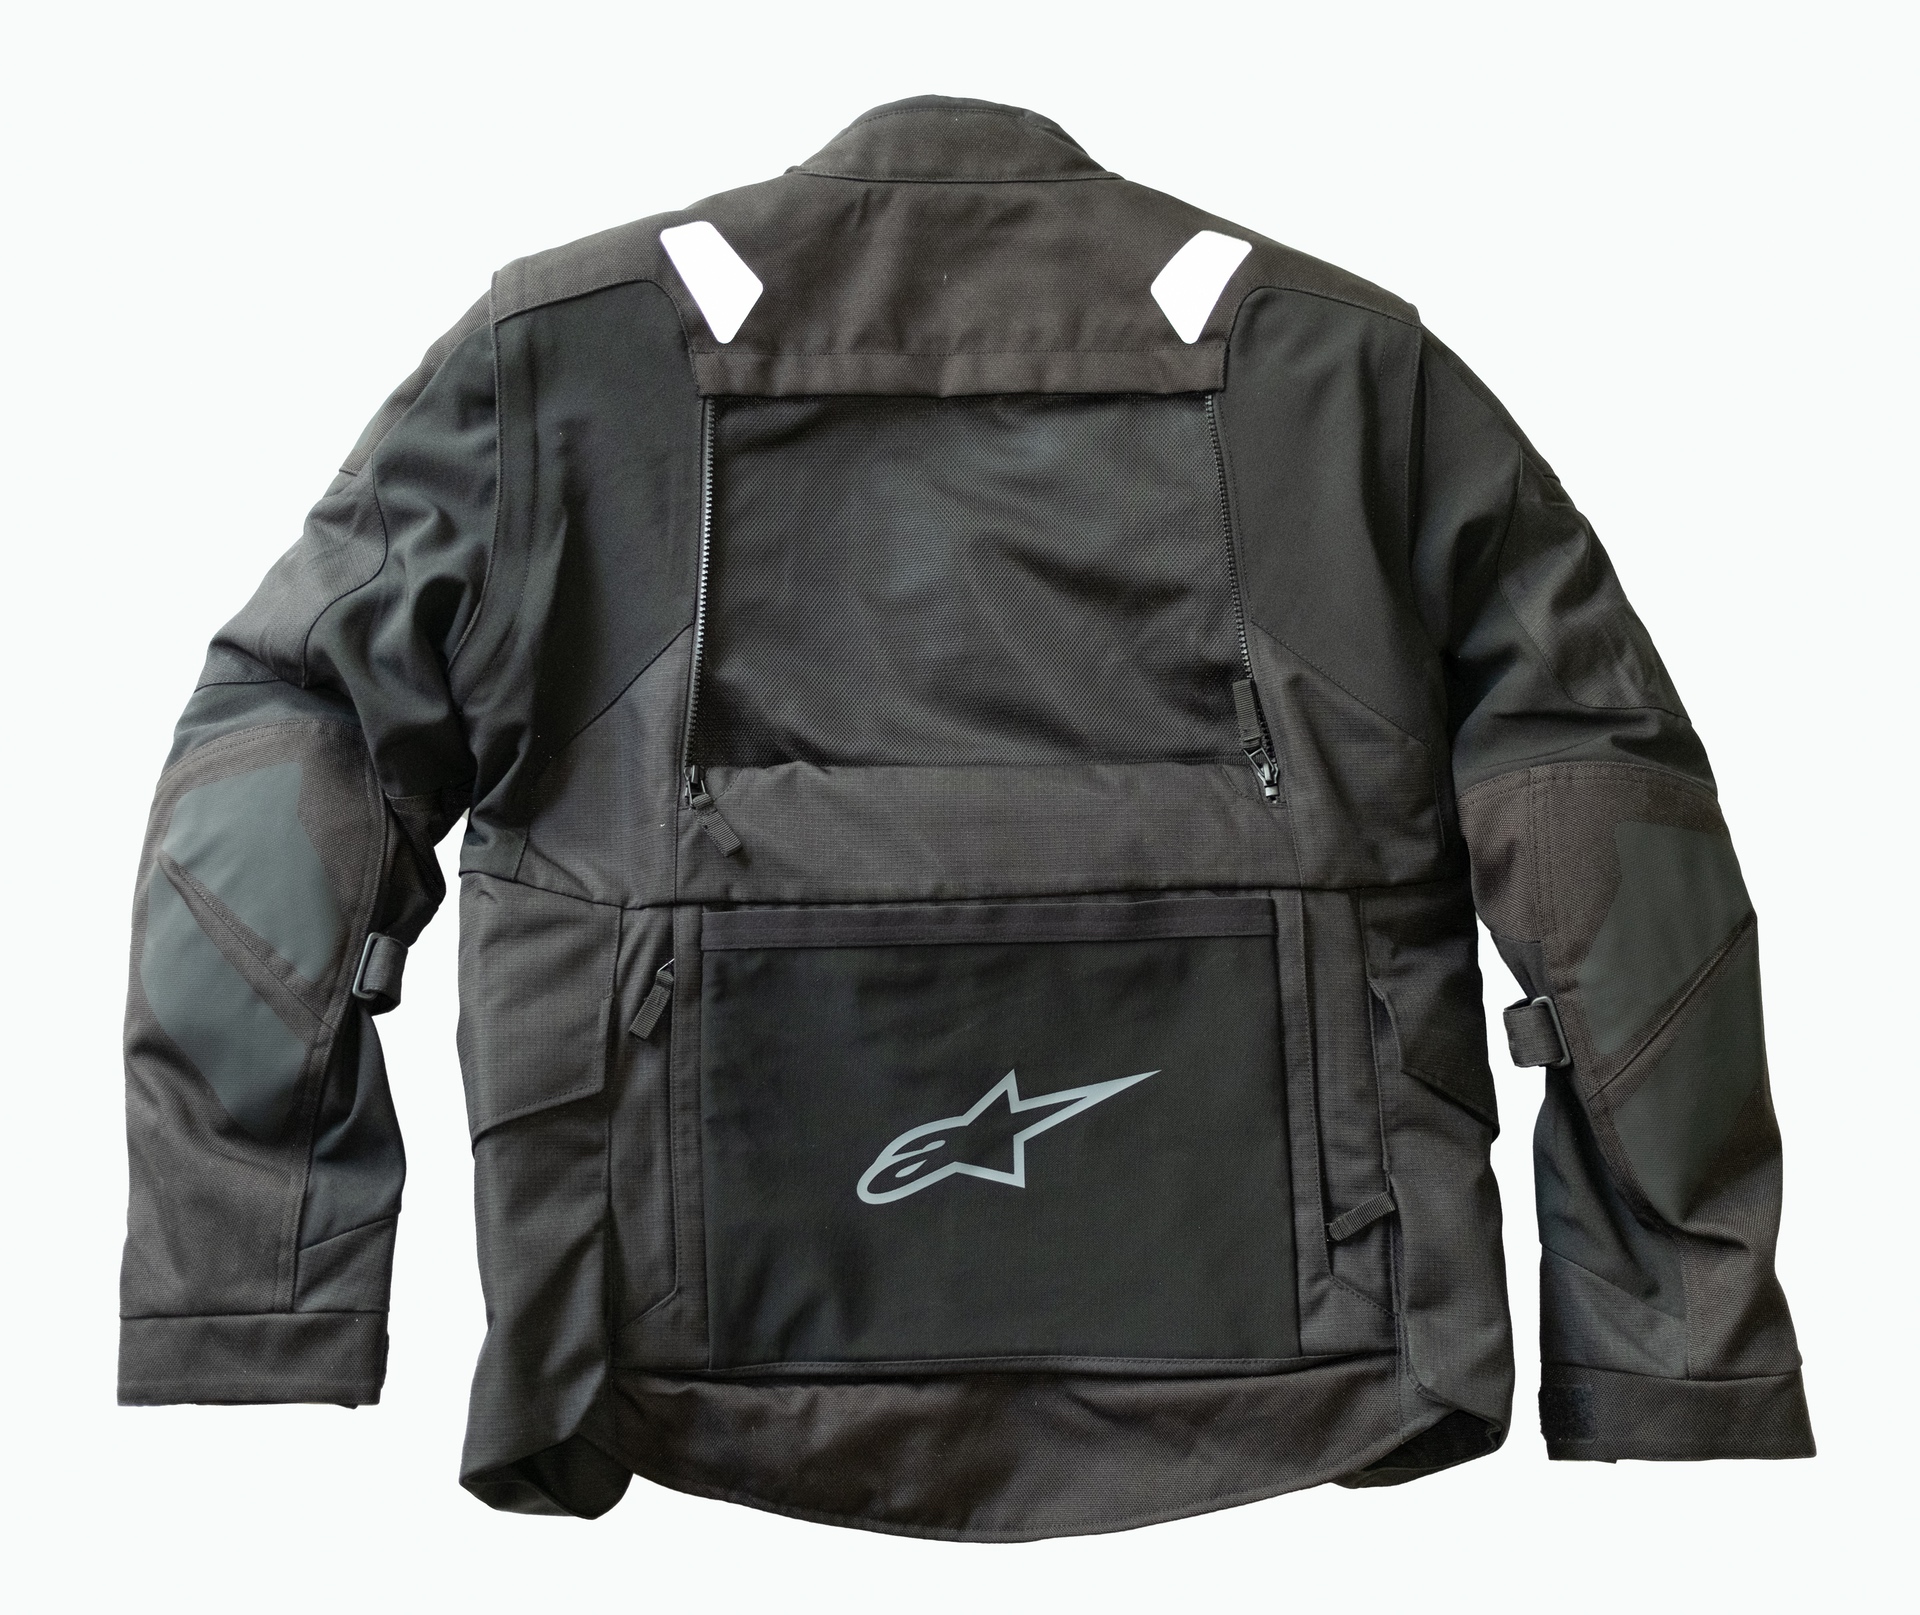 Image of rear of Alpinestars Halo Drystar jacket with vent open